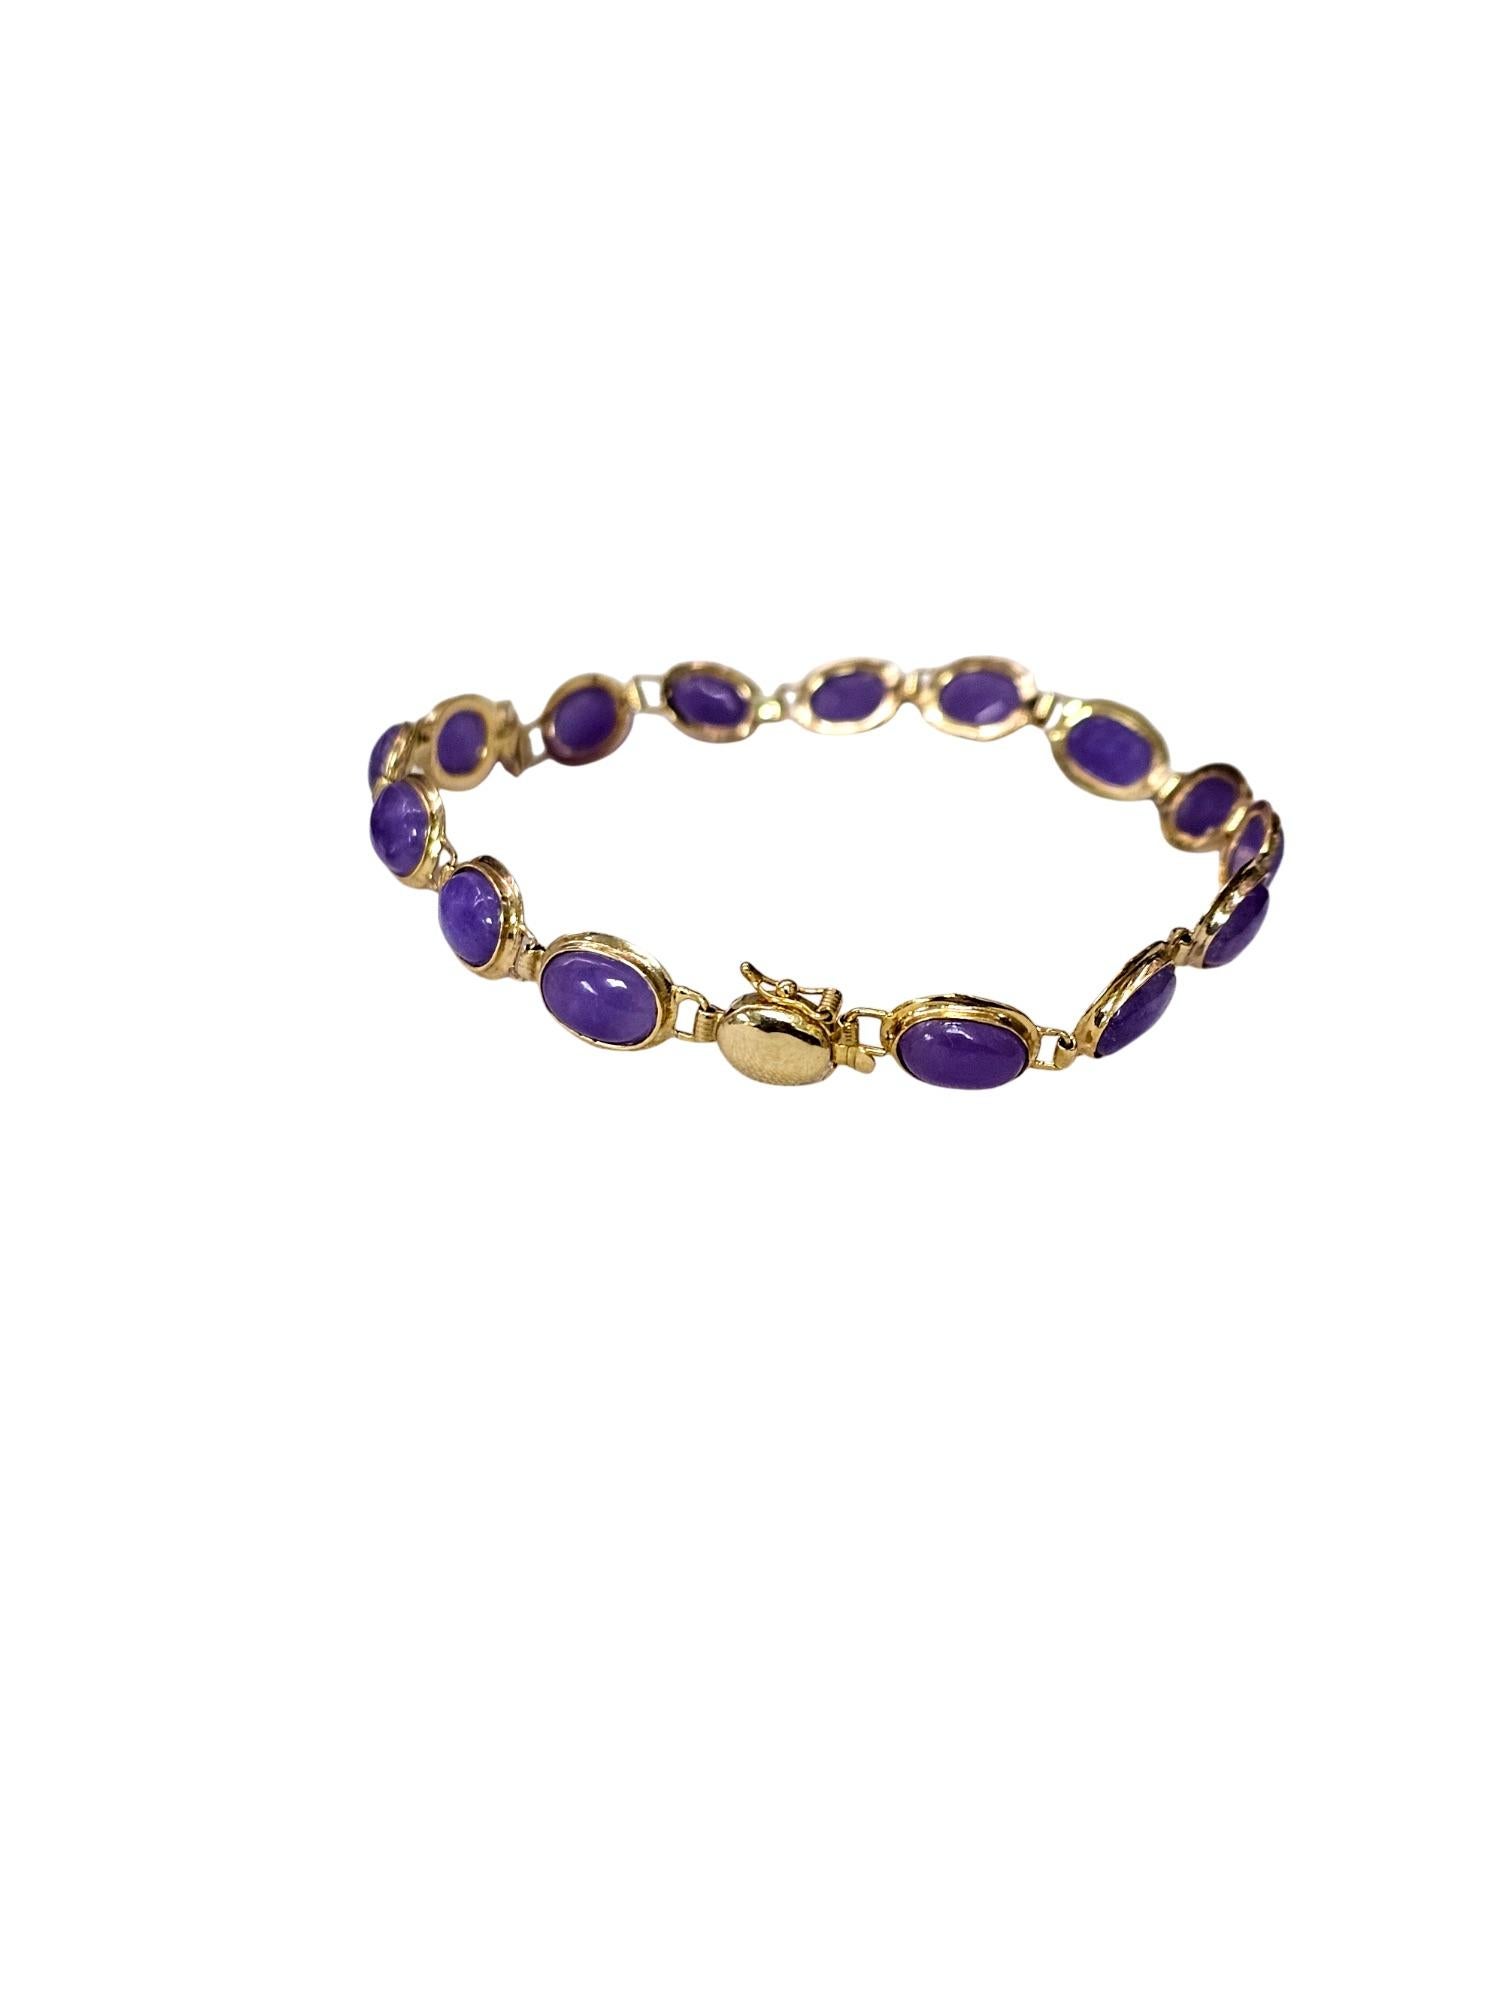 Women's or Men's Tibetan Purple Lavender Jadeite Beaded Bracelet (with 14K Solid Yellow Gold) For Sale